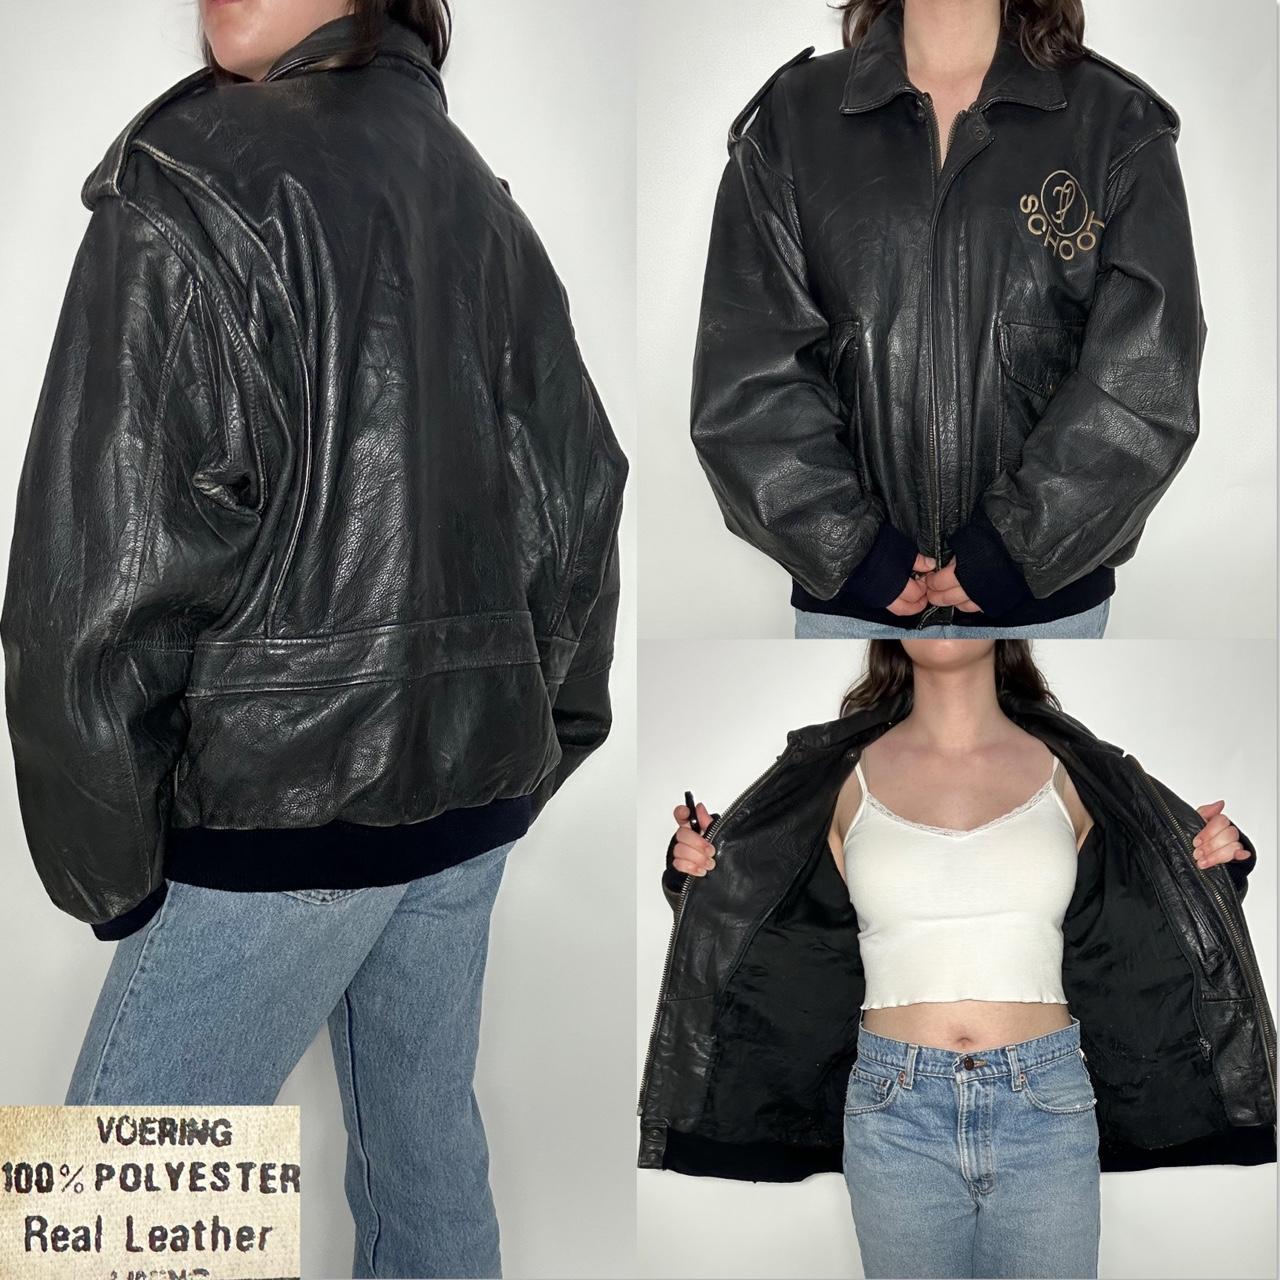 Vintage 90s leather bomber flying jacket